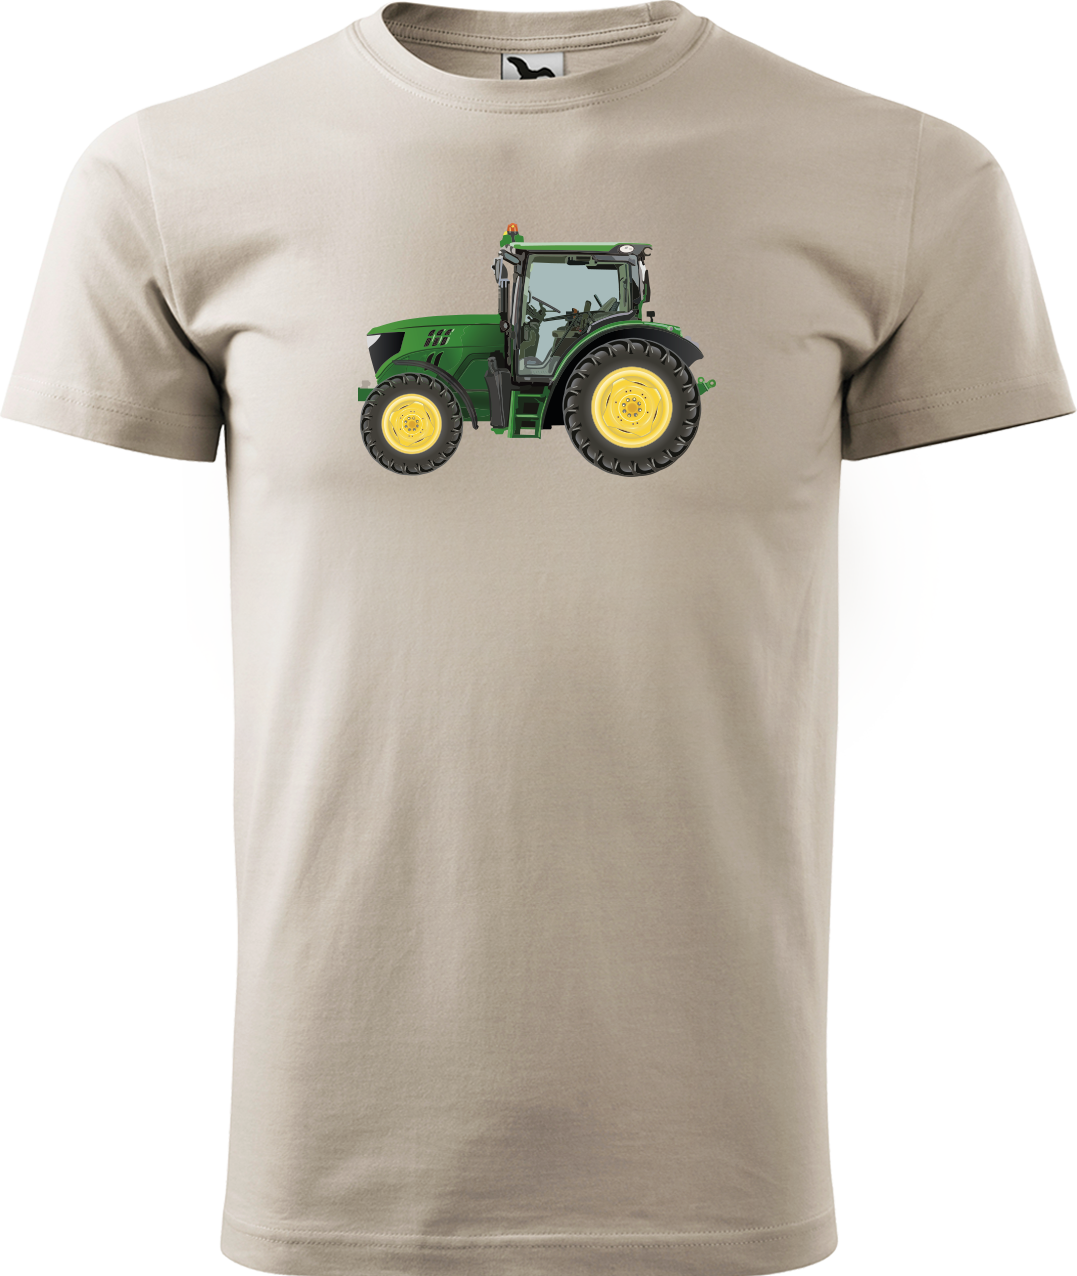 Tričko s traktorem - Zelený traktor Velikost: 2XL, Barva: Béžová (51)